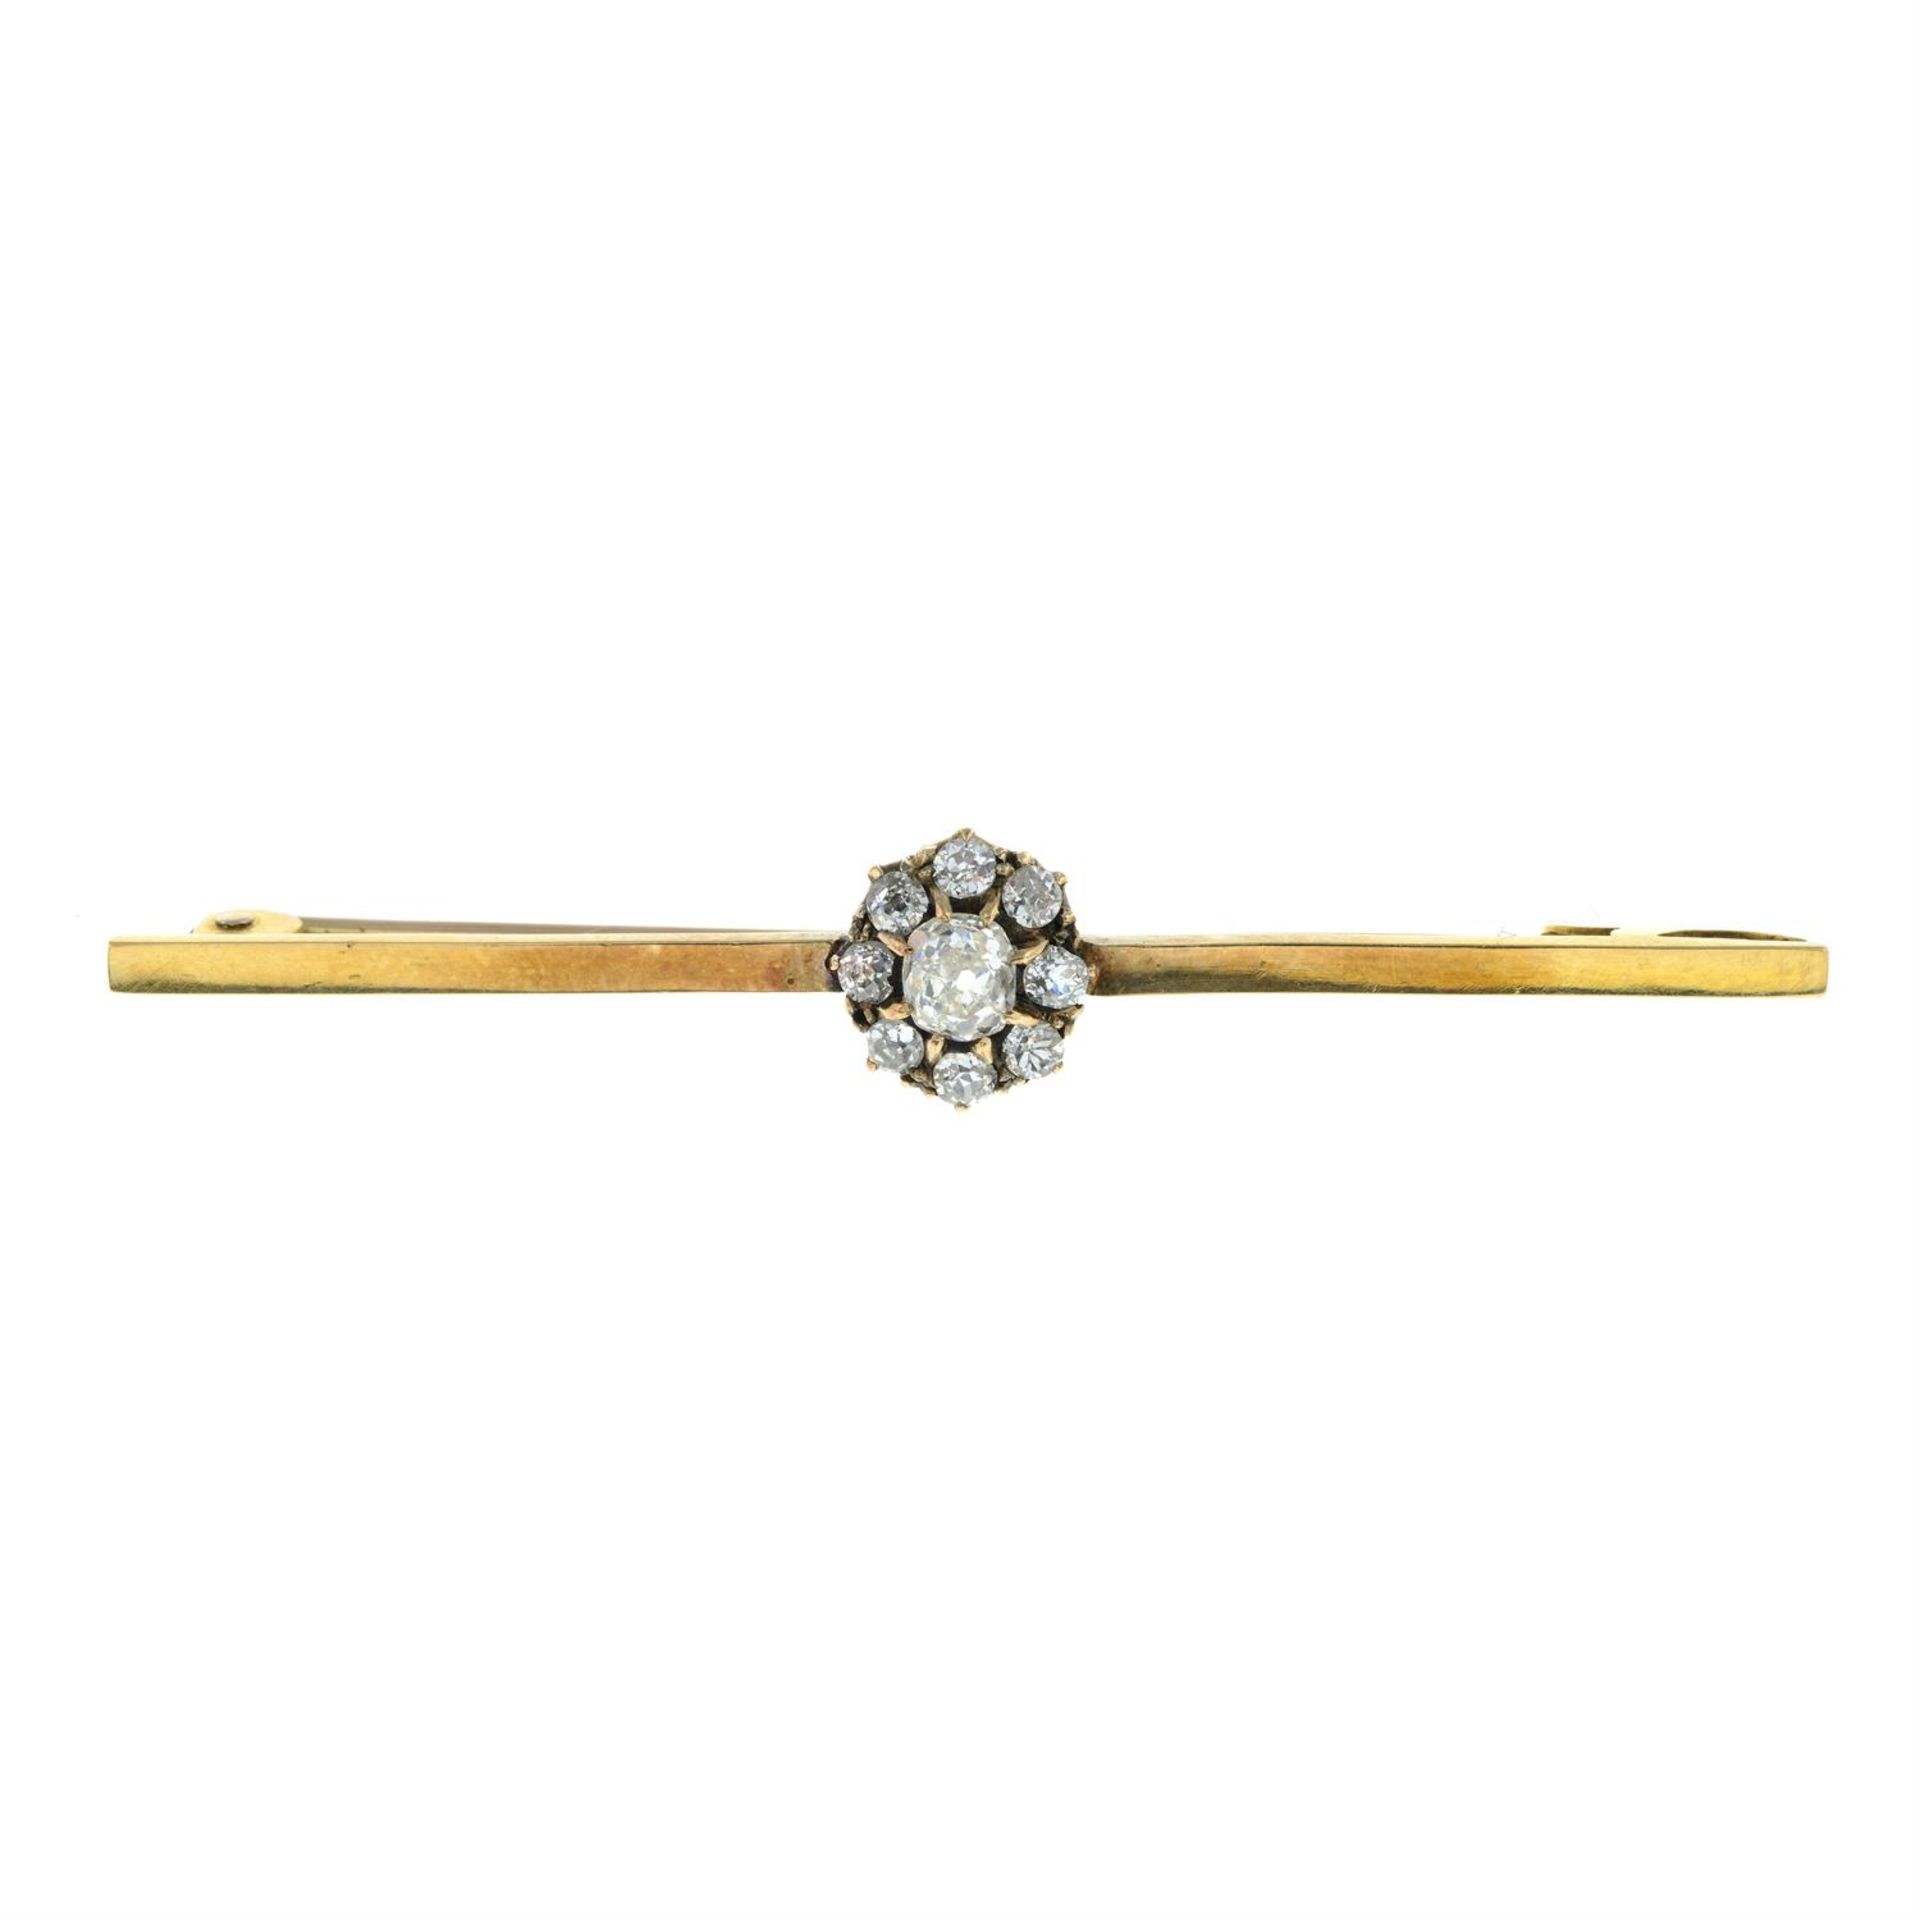 Early 20th century 18ct gold diamond brooch.